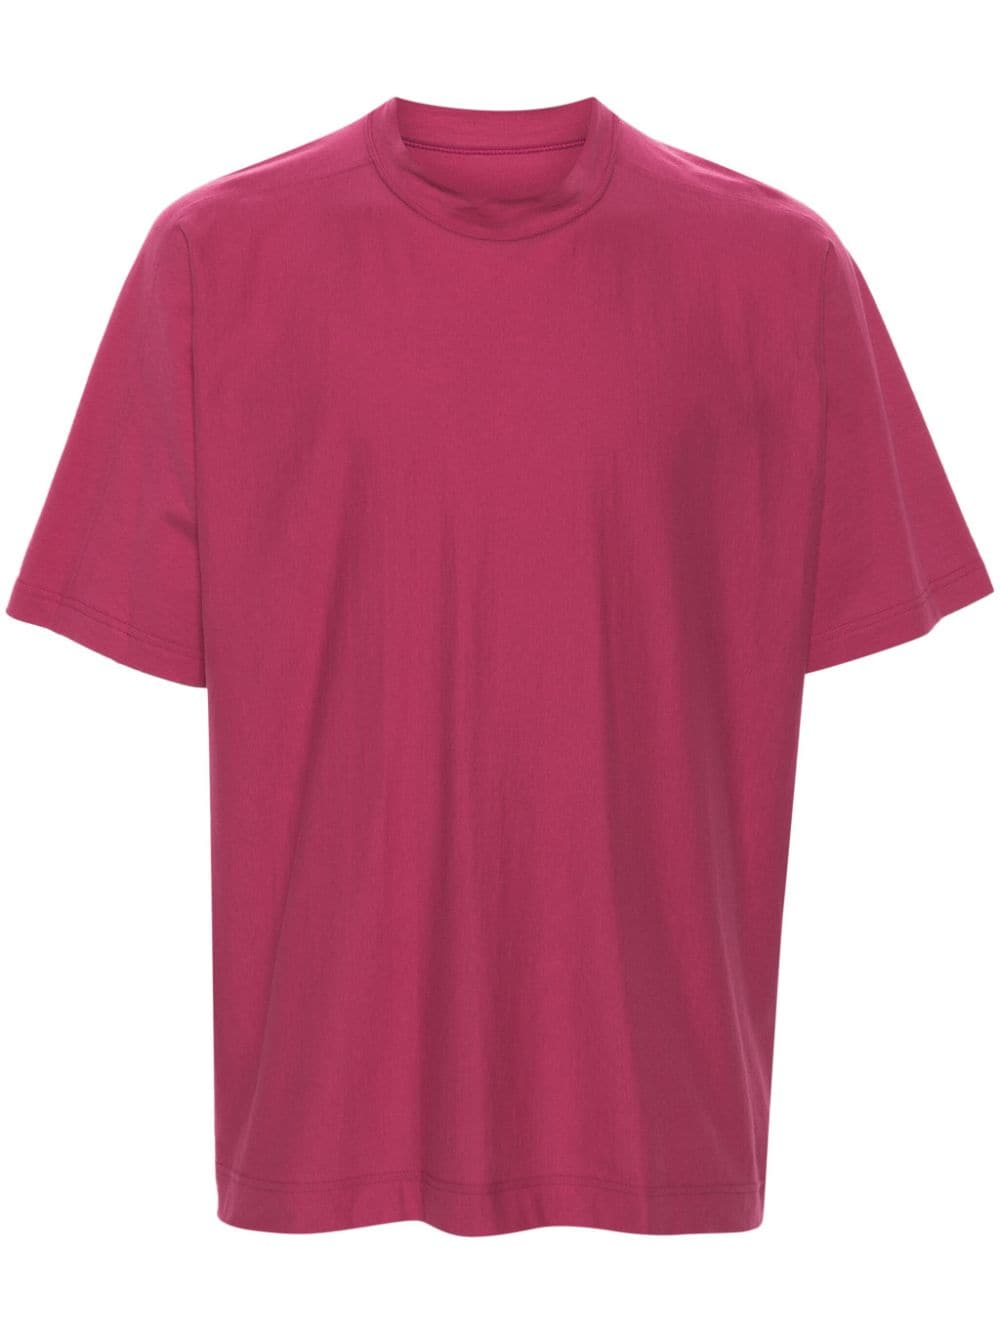 Homme Plissé Issey Miyake short-sleeve cotton T-shirt - Pink von Homme Plissé Issey Miyake